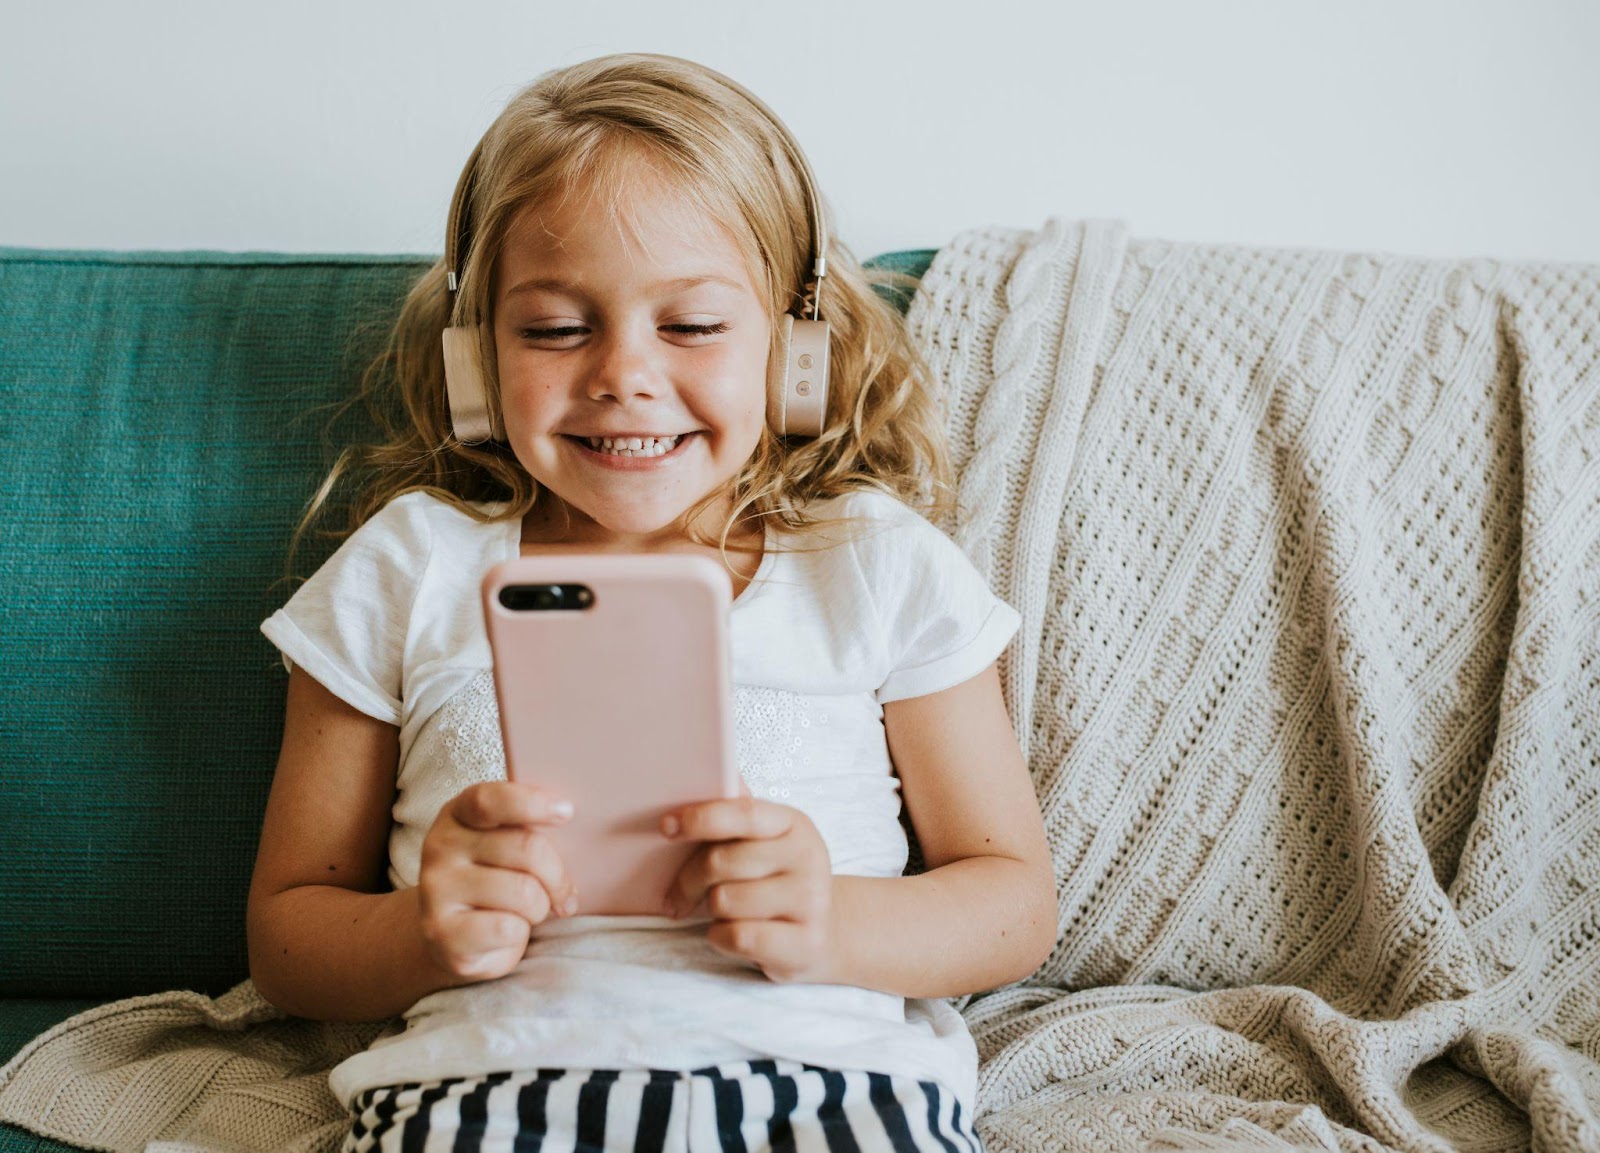 A Parent’s Guide to Digital Detox for Kids